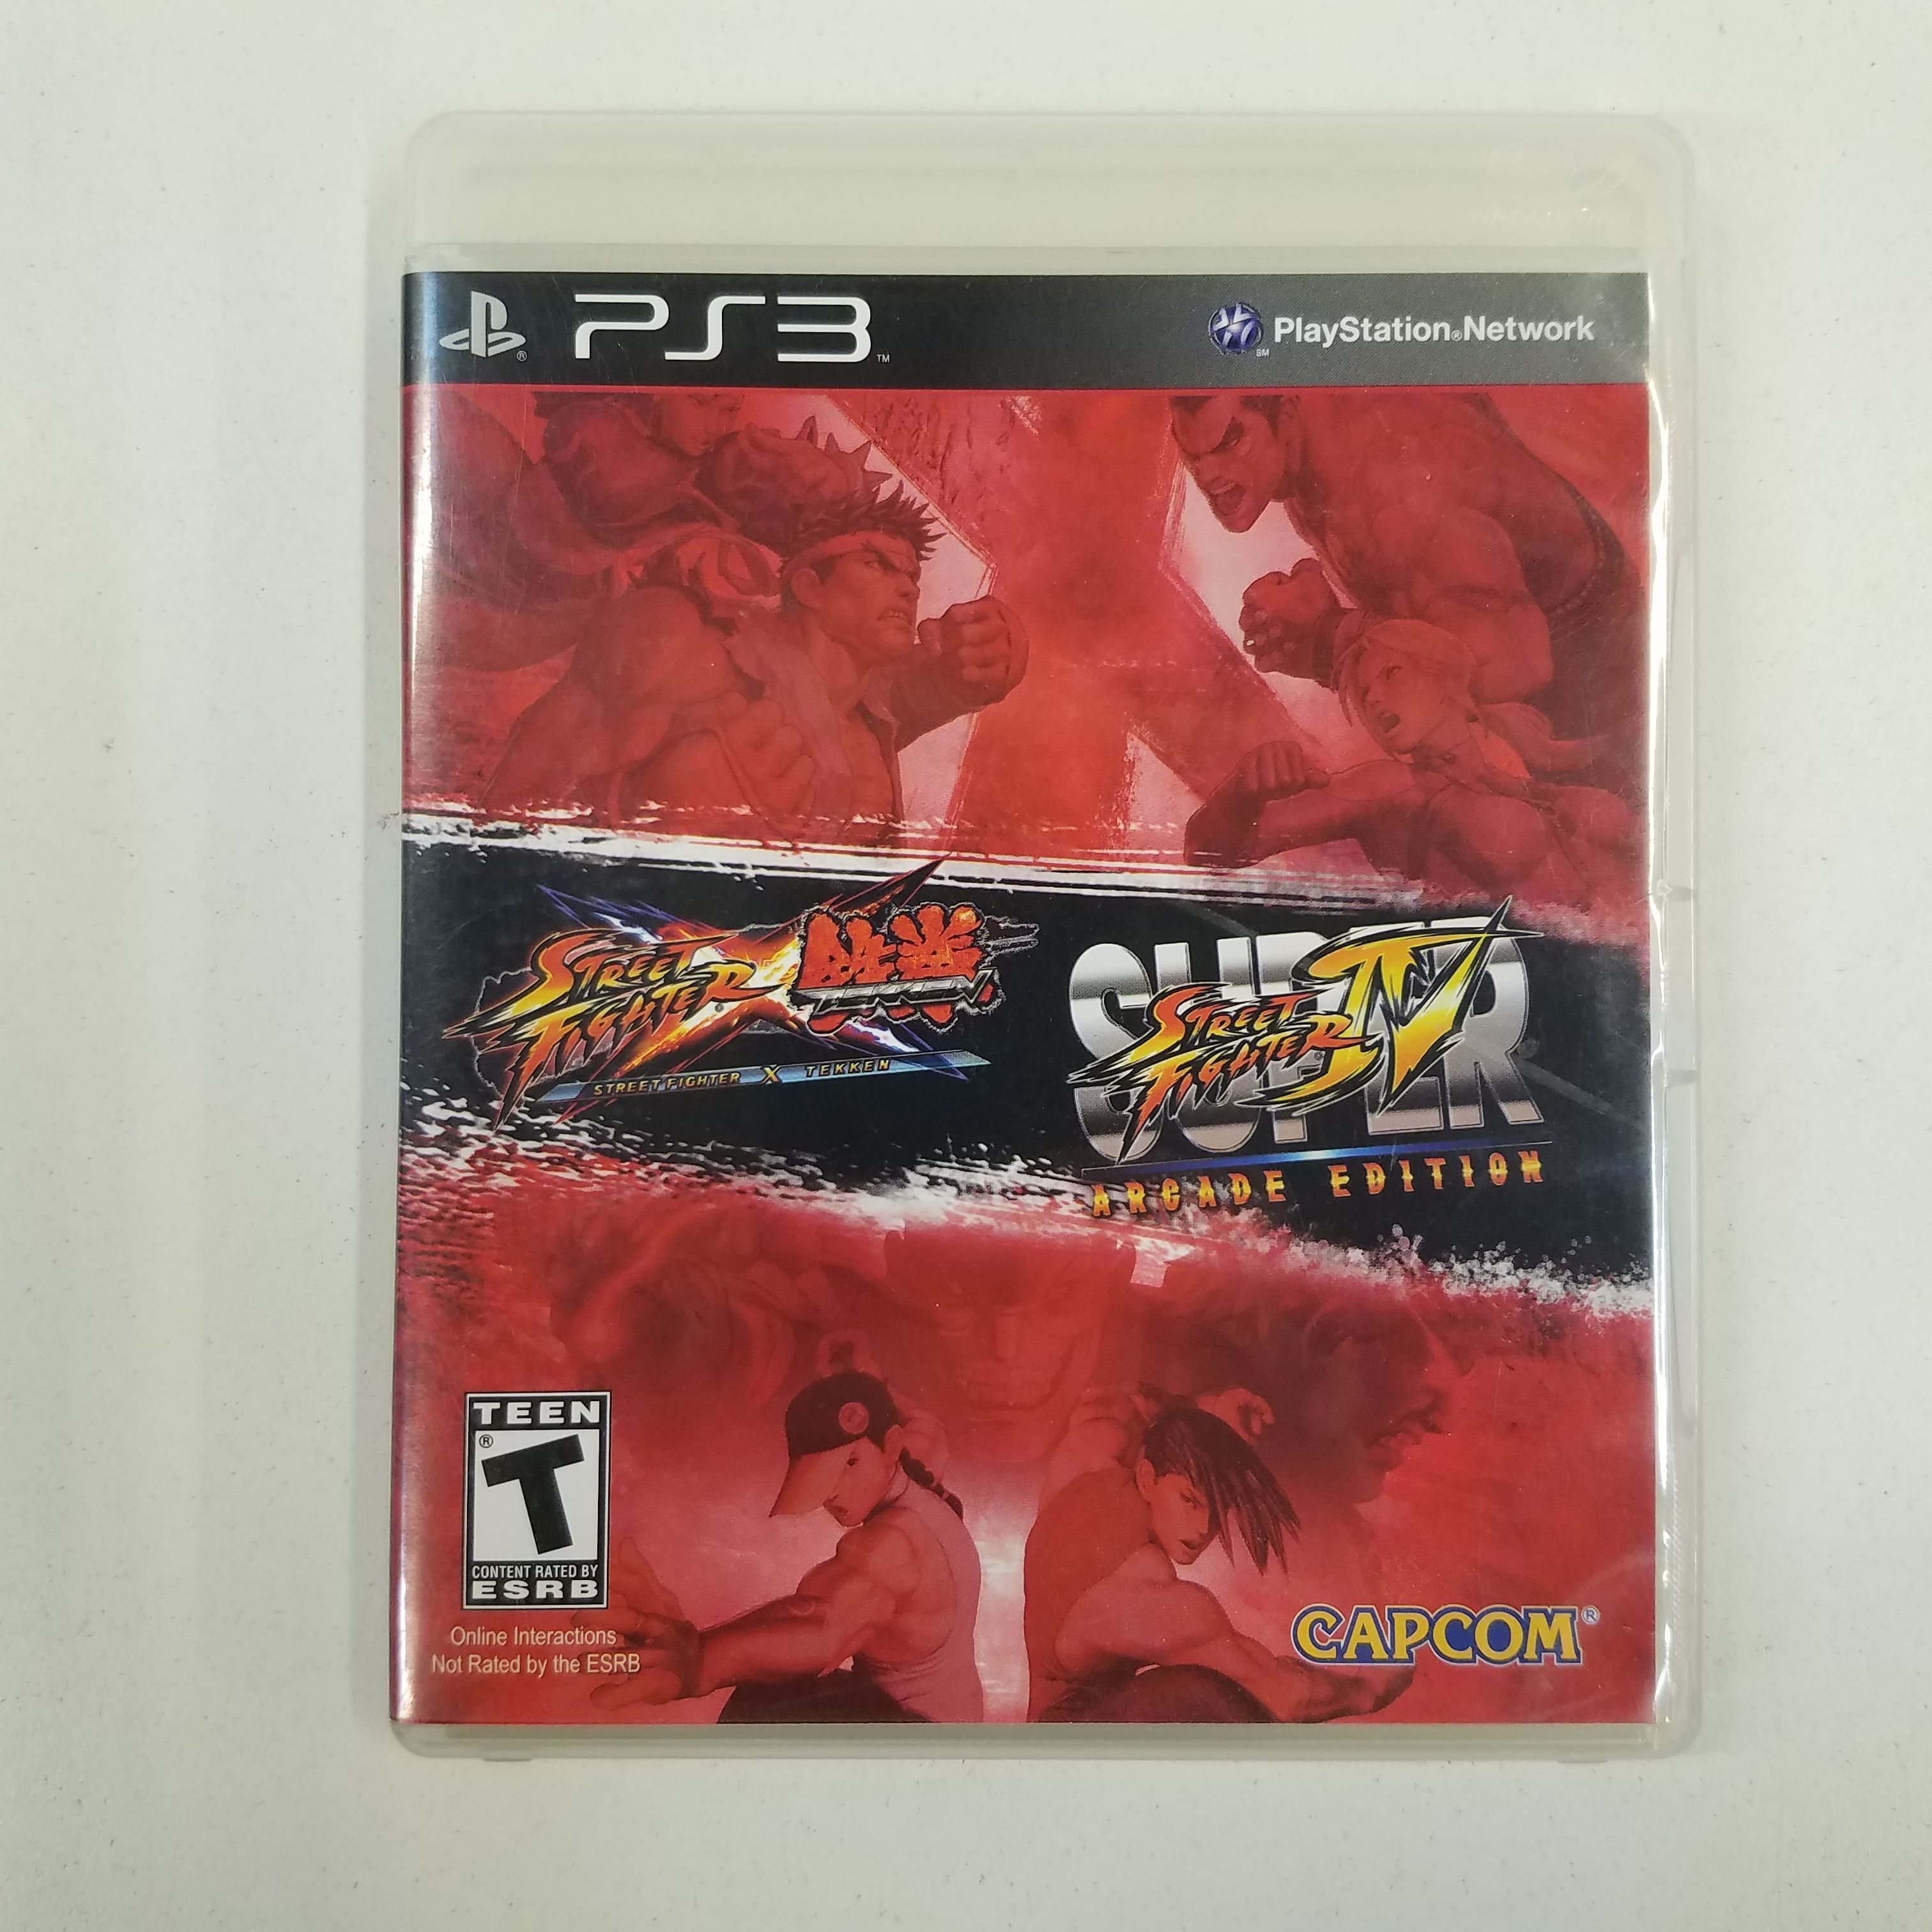 Tekken X Street Fighter en PS4 y X720?